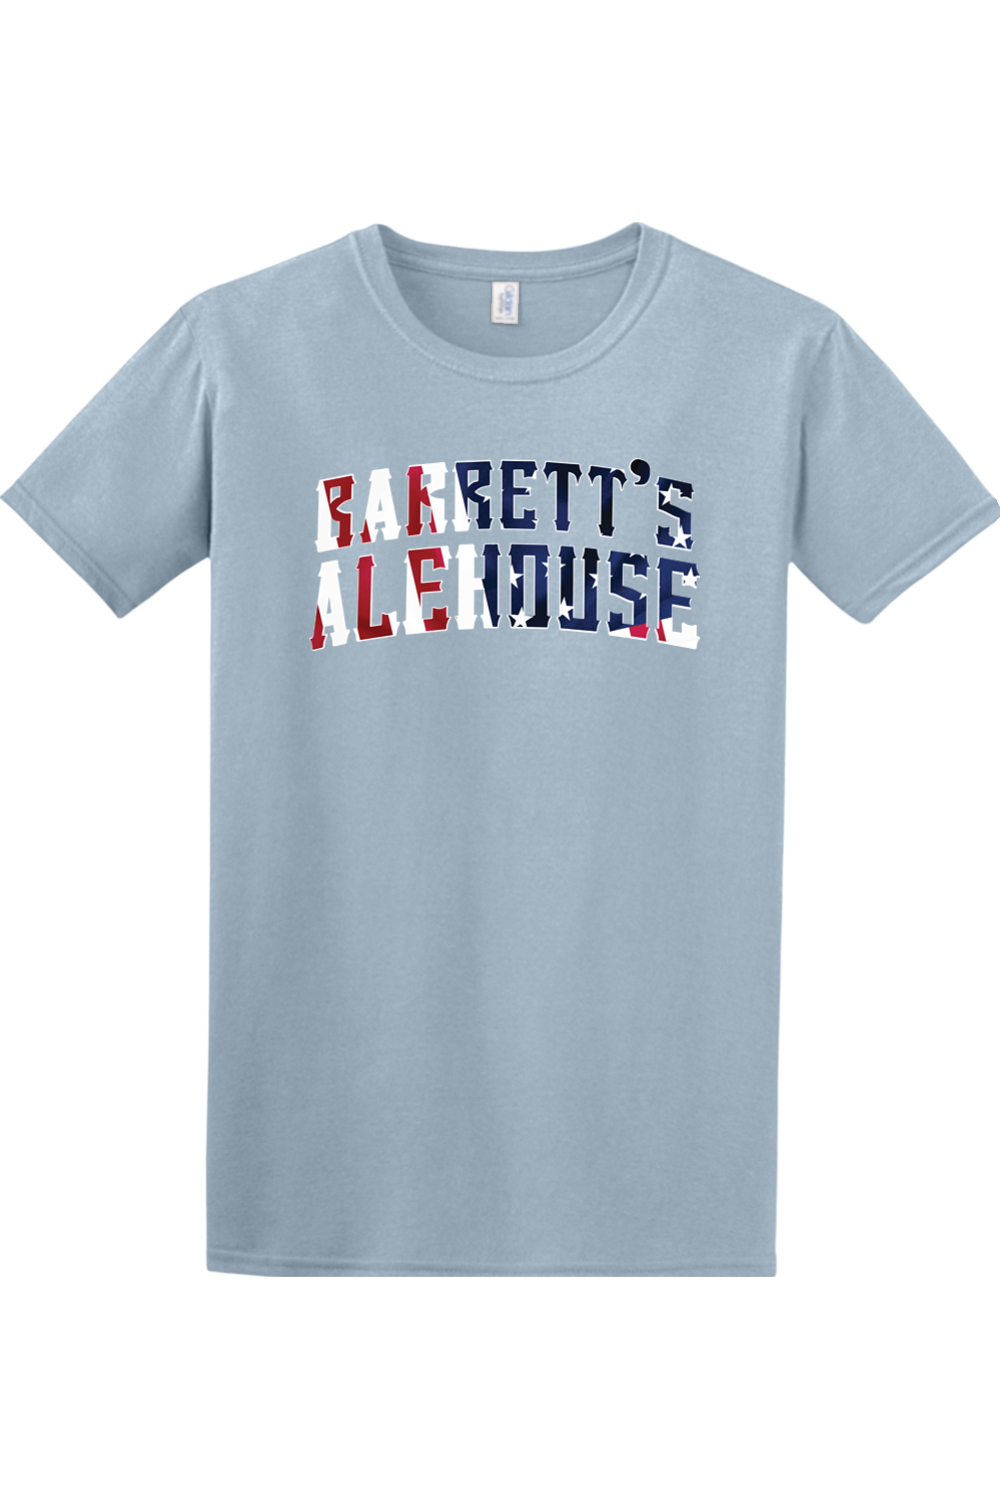 Barrett's Alehouse Flag Unisex T-Shirt